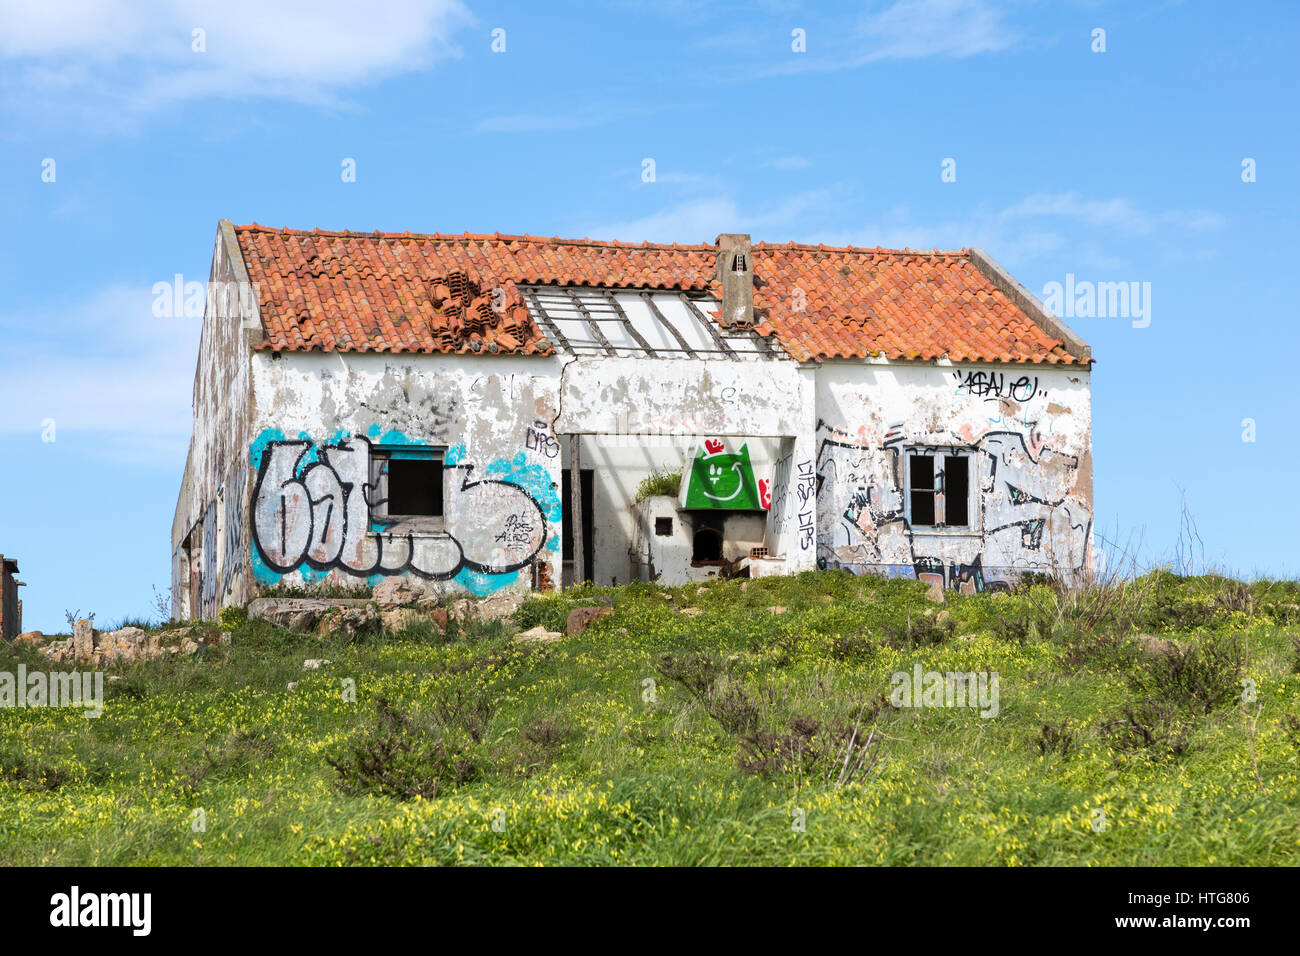 Graffiti on abandoned building, Algarve, Portugal Stock Photo